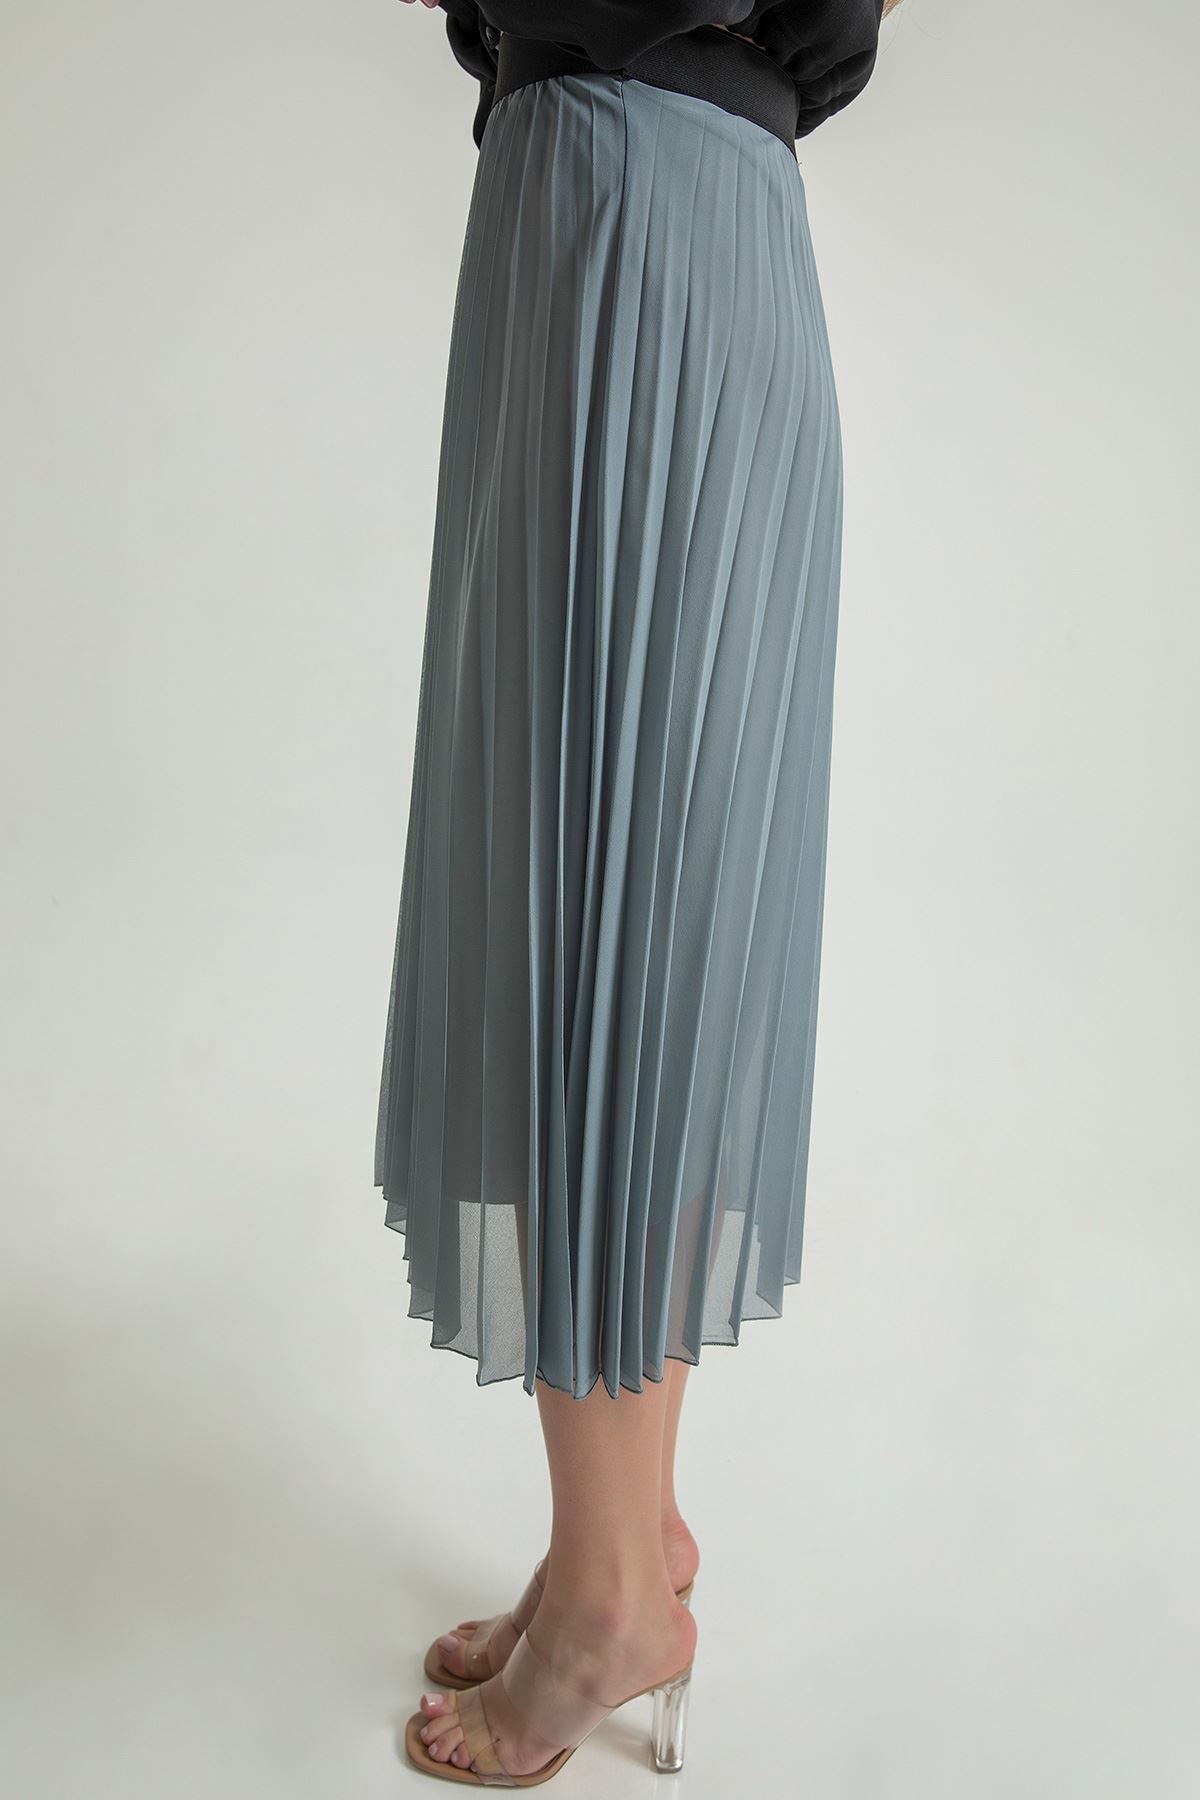 Chiffon Fabric Midi Comfy Fit Pleated Women'S Skirt - Grey